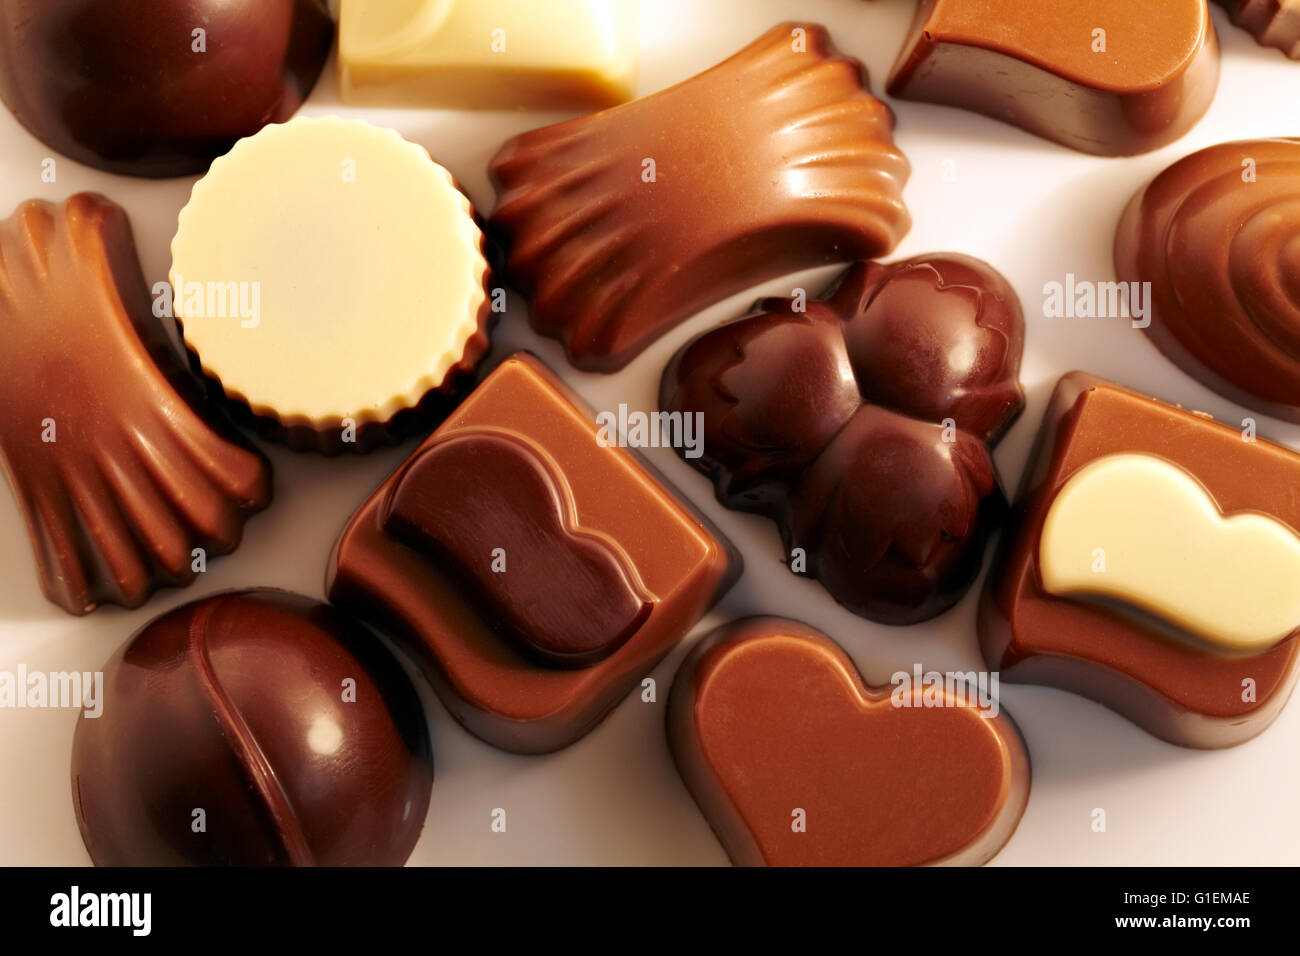 Variety of Chocolates. Stock Photo